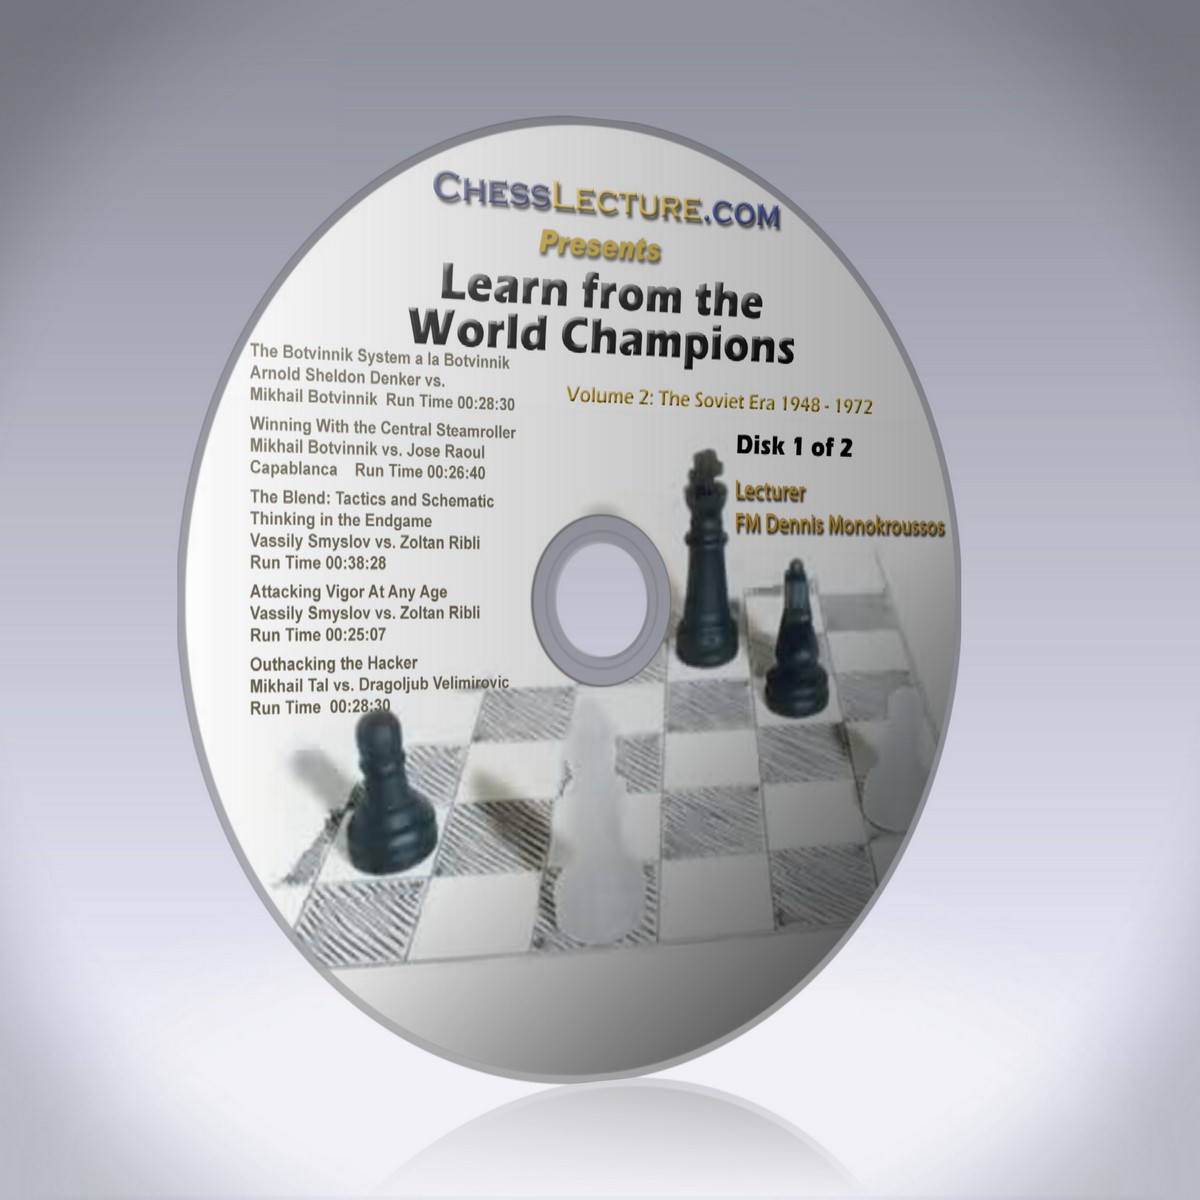 Play Like A World Champion: Botvinnik, Smyslov And Tal - Chess Lessons 